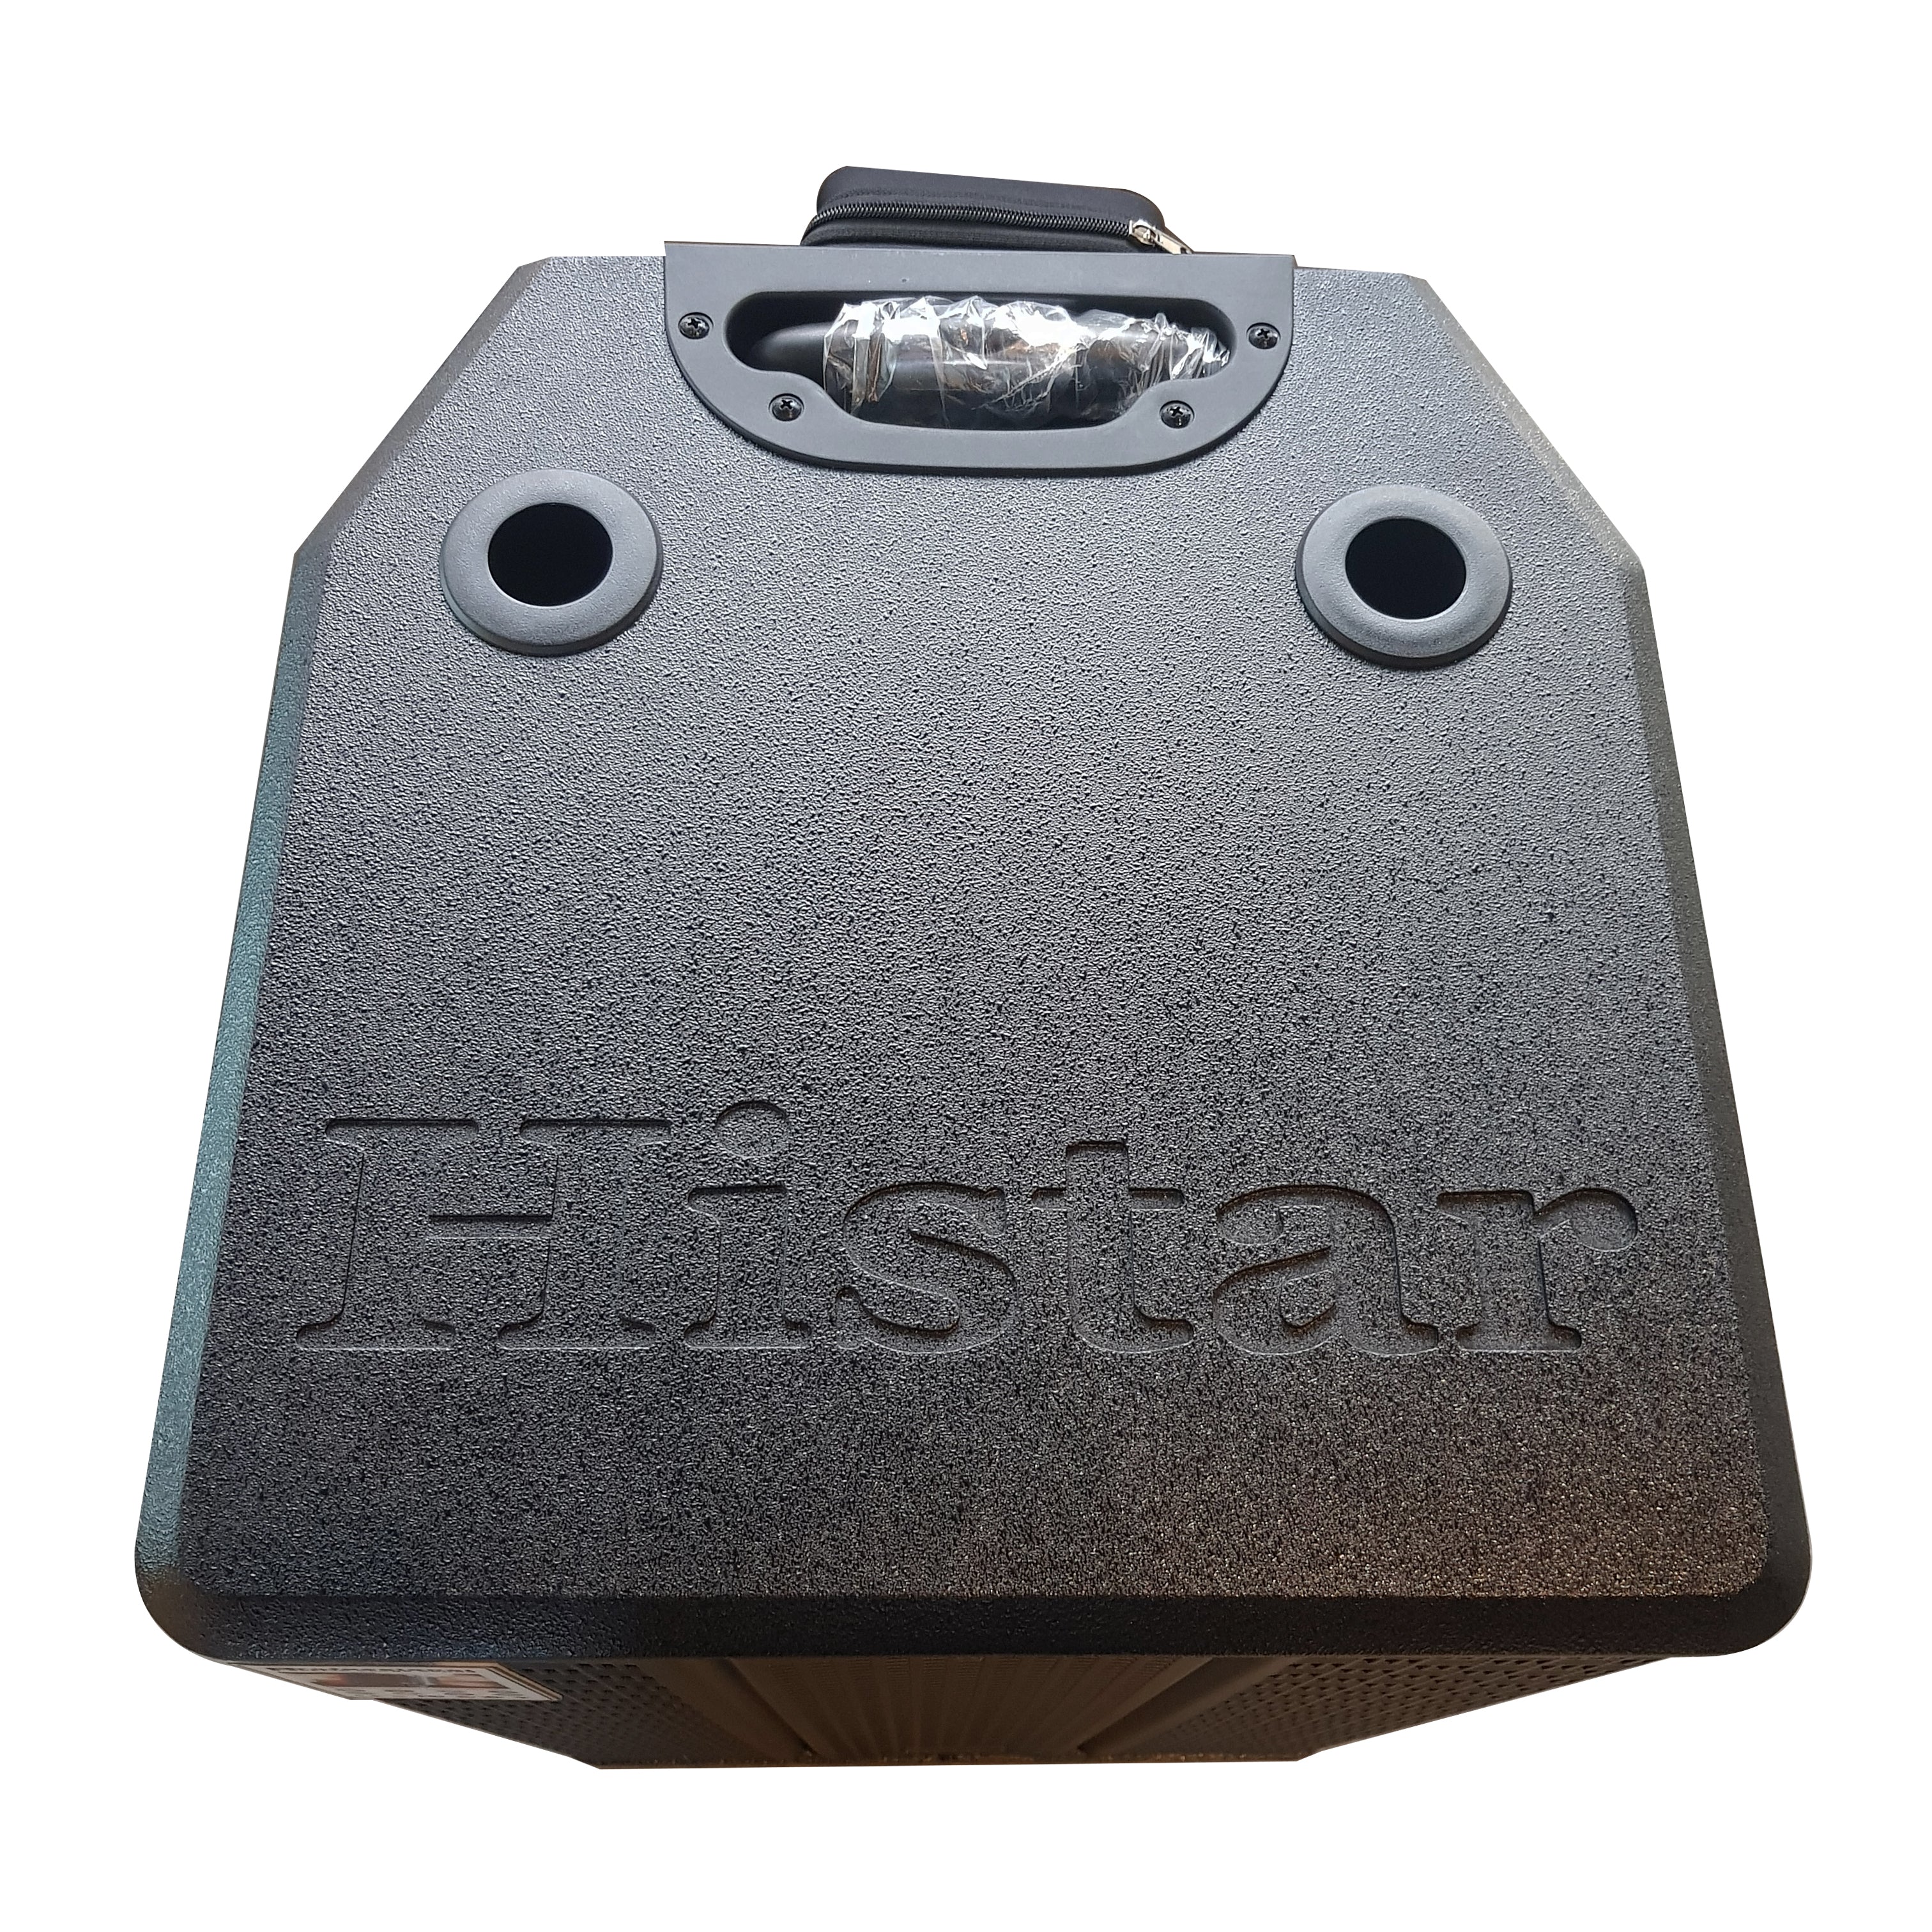 HST-1512 Histar Wireless Speaker with 2 Microphone